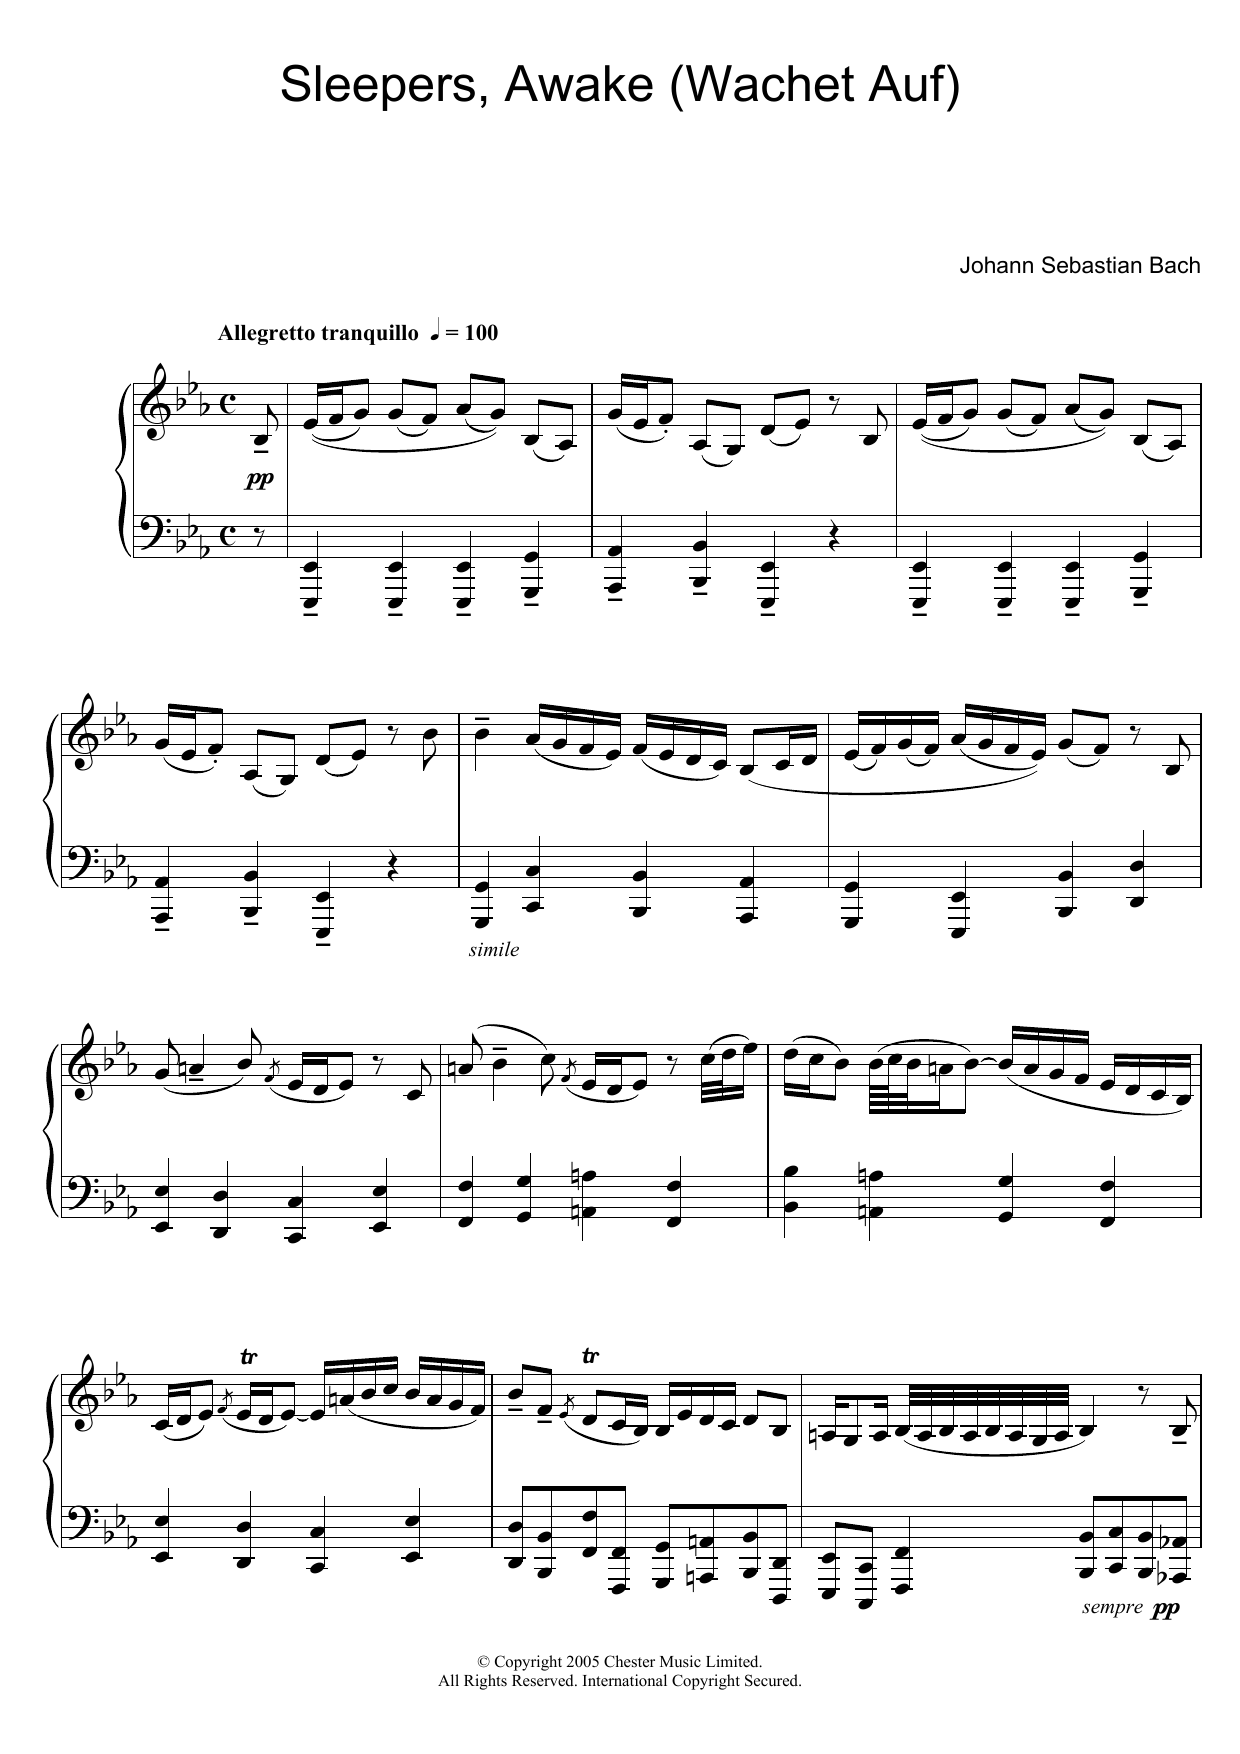 Johann Sebastian Bach Sleepers, Awake (Wachet Auf) Sheet Music Notes & Chords for Easy Piano - Download or Print PDF